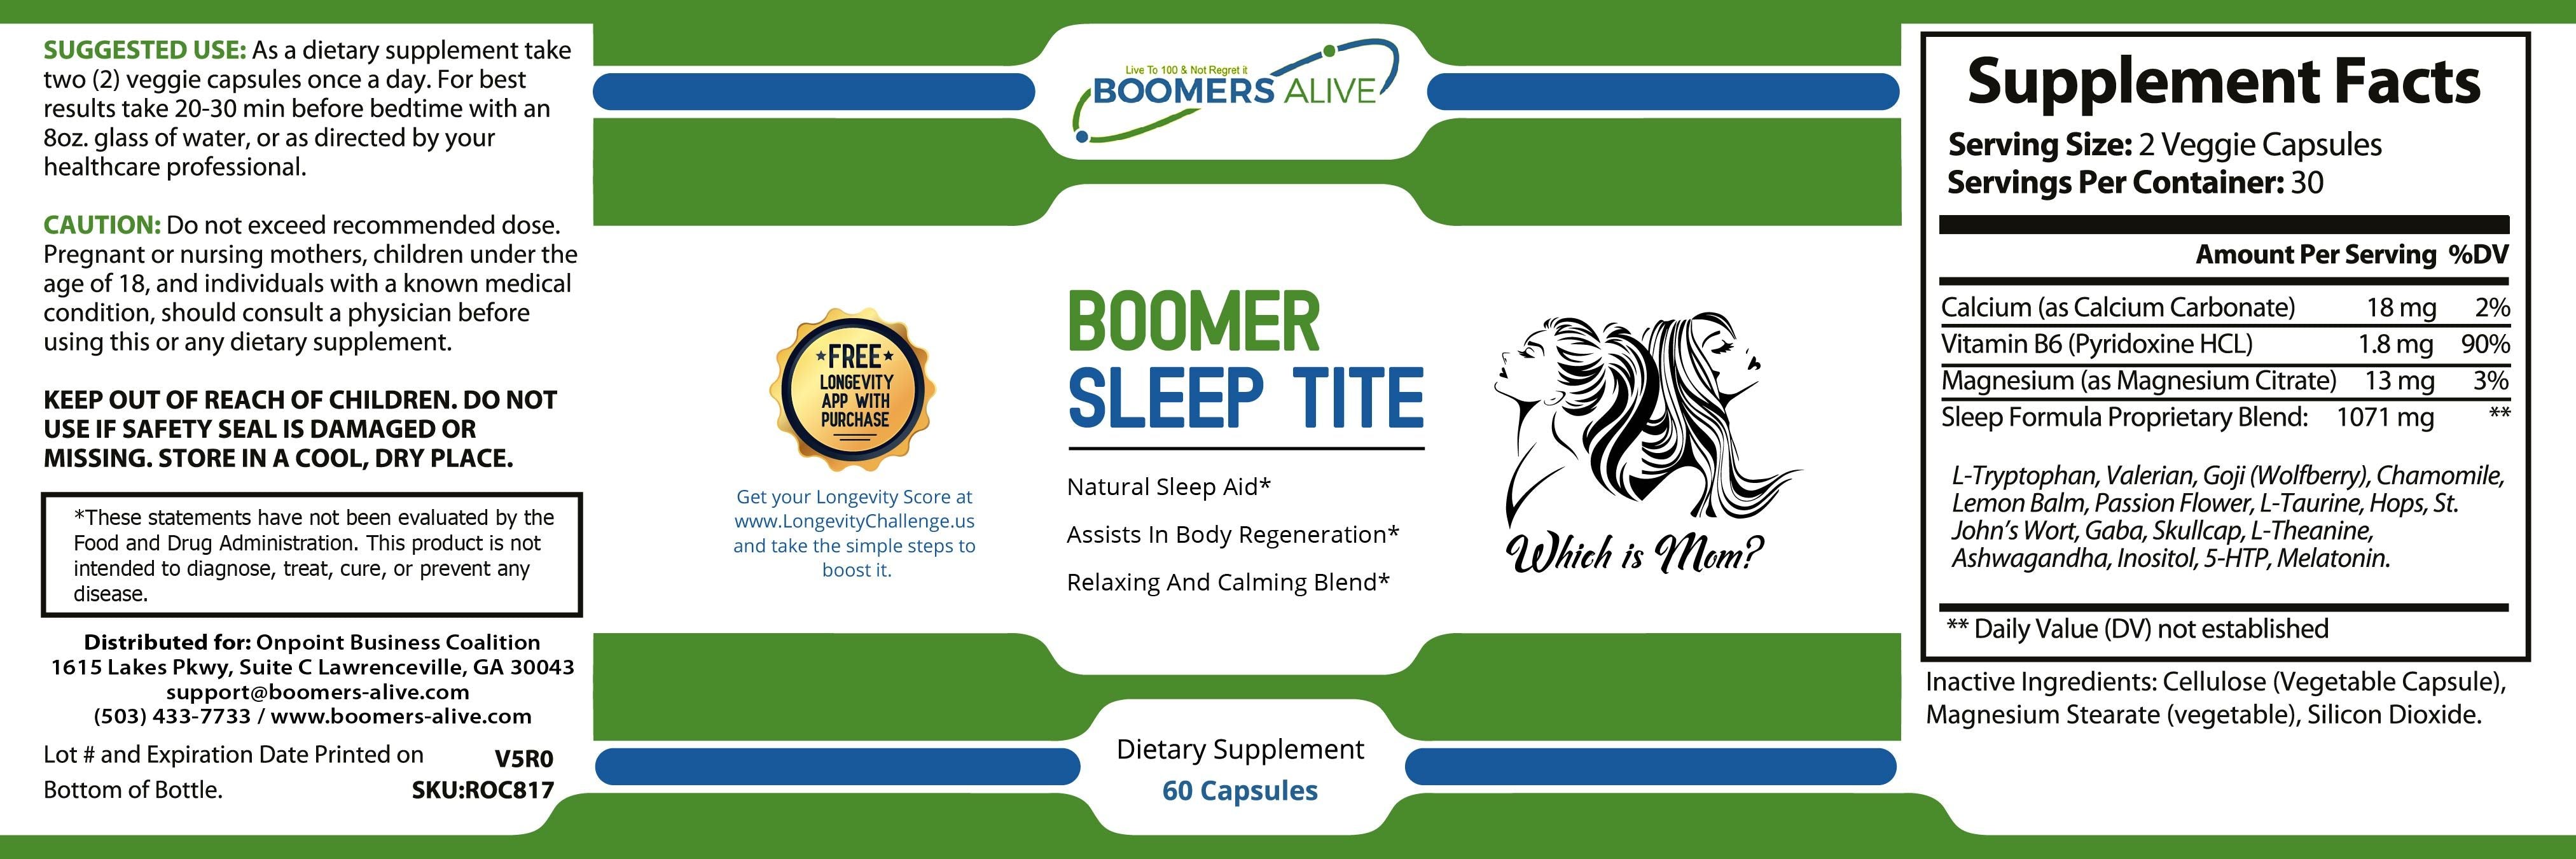 Buy 1 - Get 2 FREE: Boomer Sleep Tite